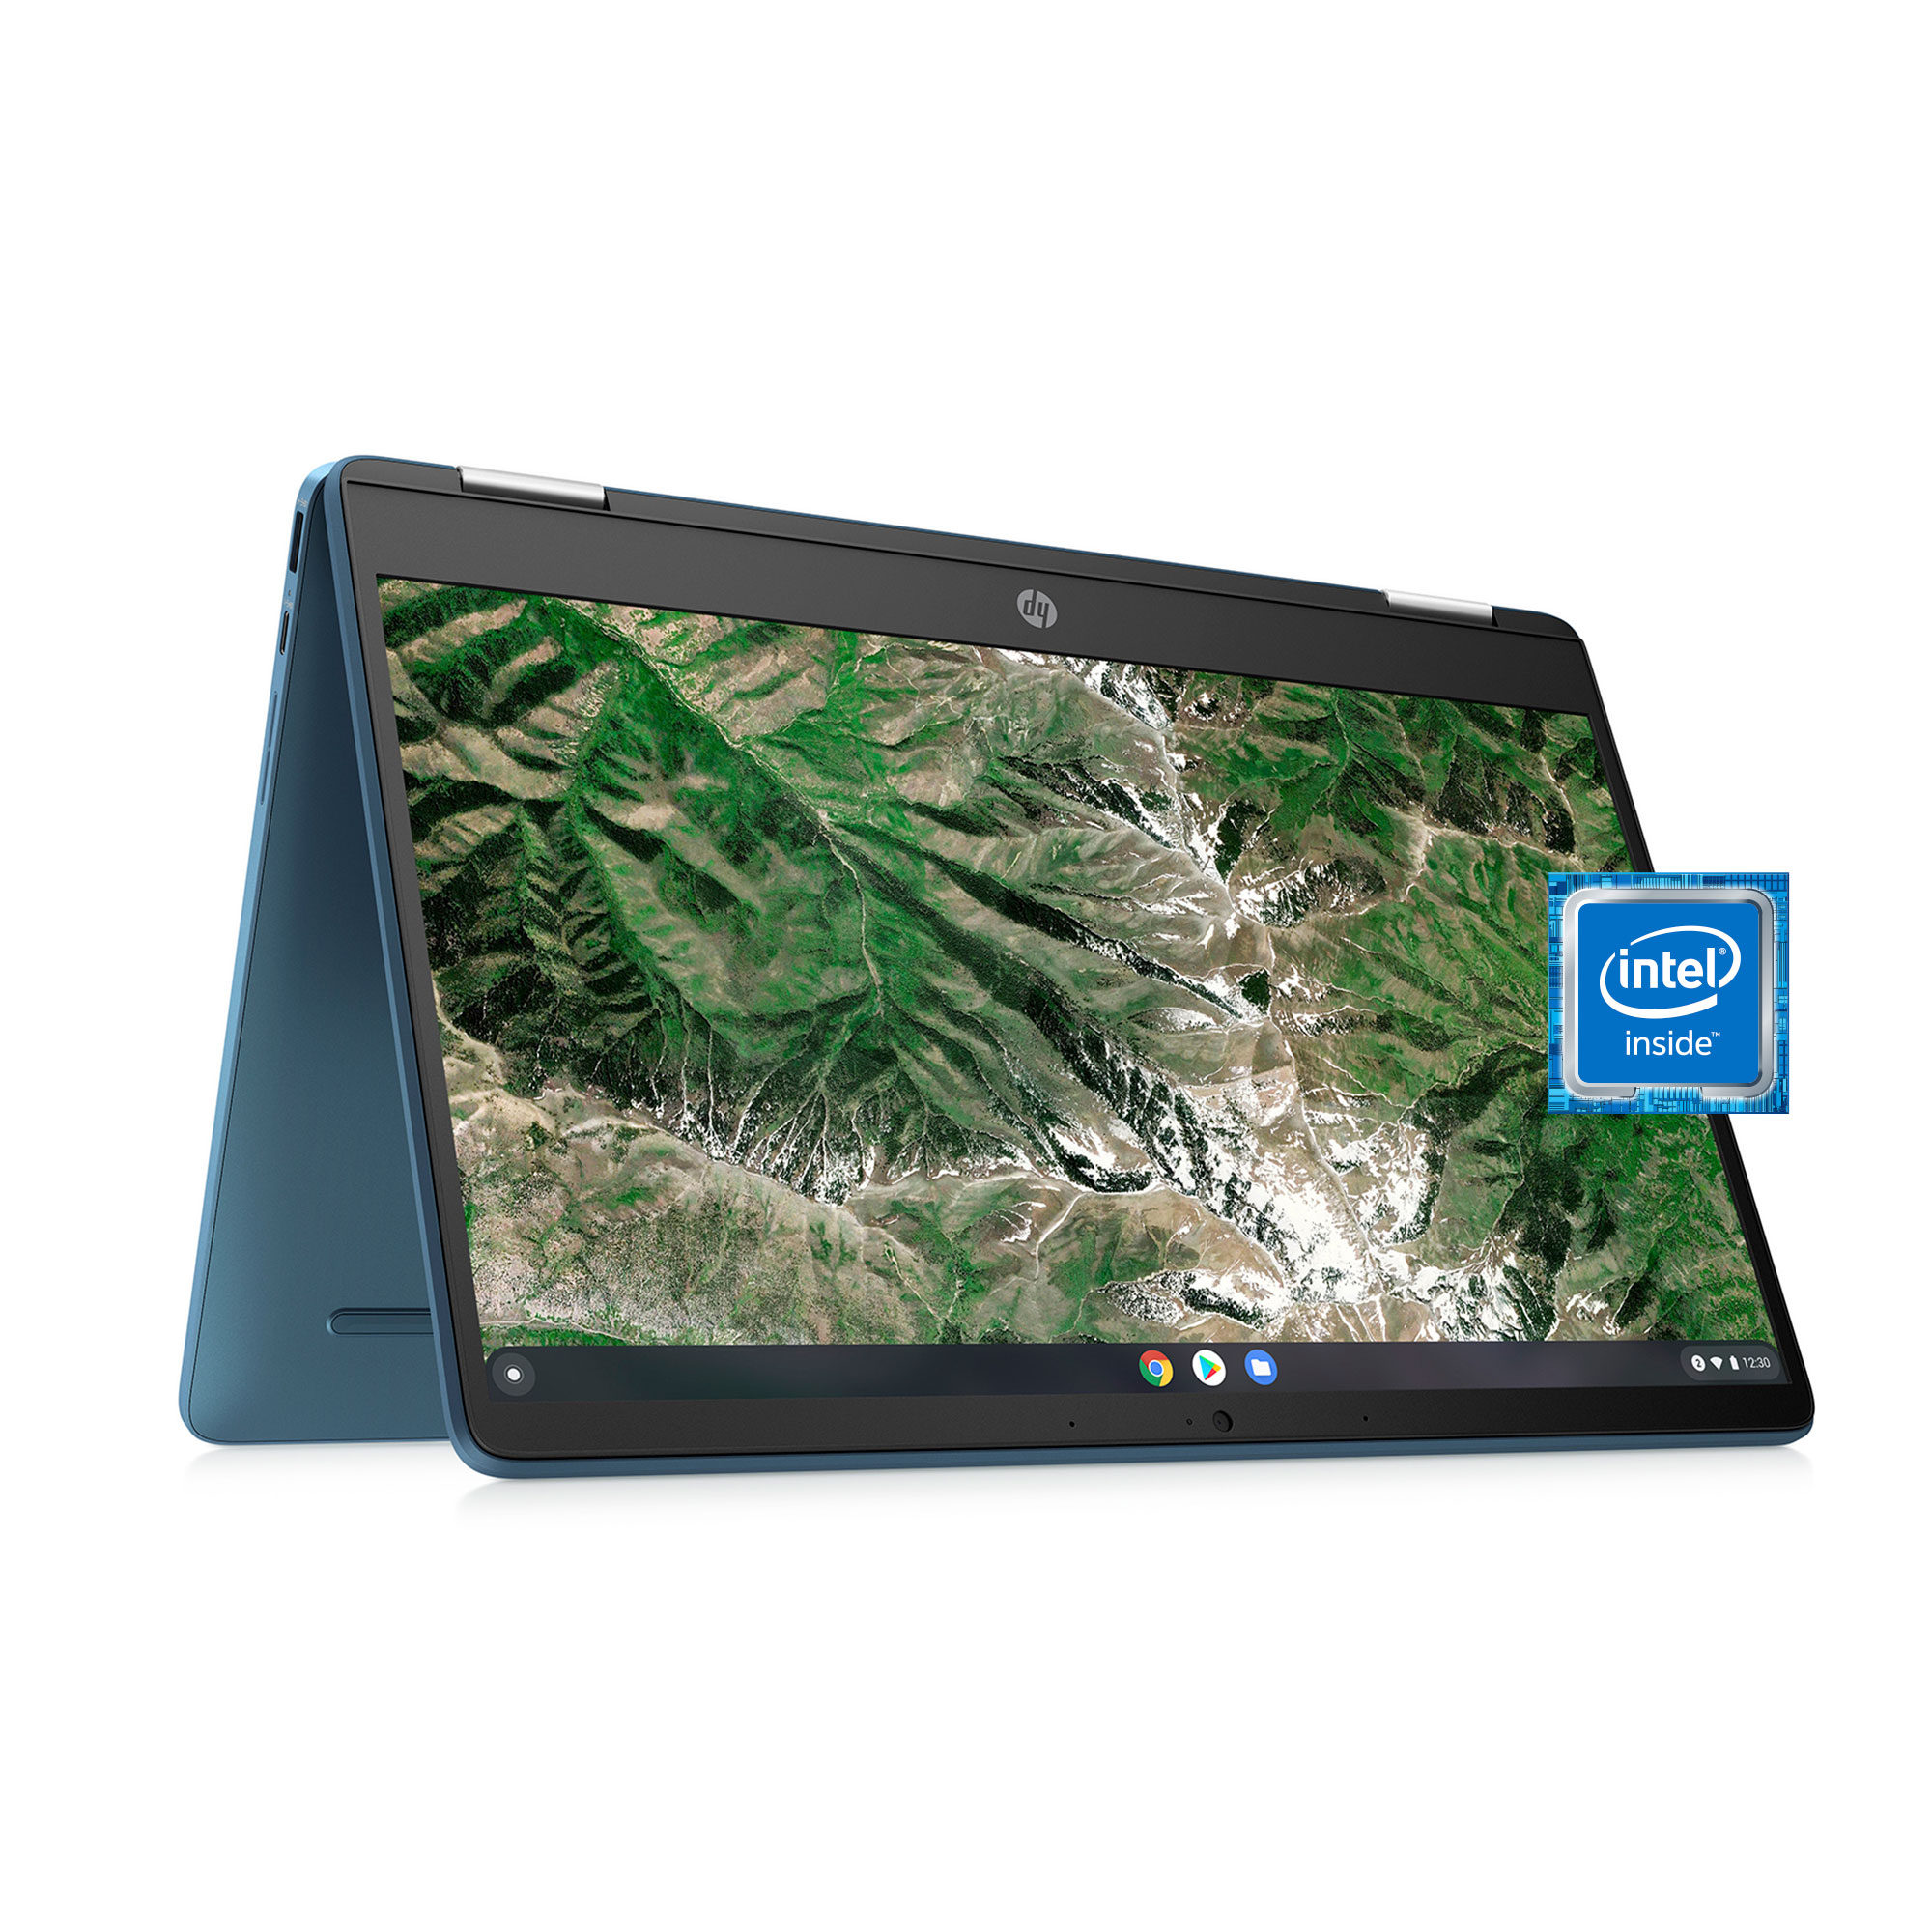 HP Chromebook x360 14" Touchscreen Laptop, Intel Celeron N4020, 4GB RAM, 64GB HD, Chrome OS, Forest Teal/Light Teal, 14a-ca0190wm - image 1 of 7